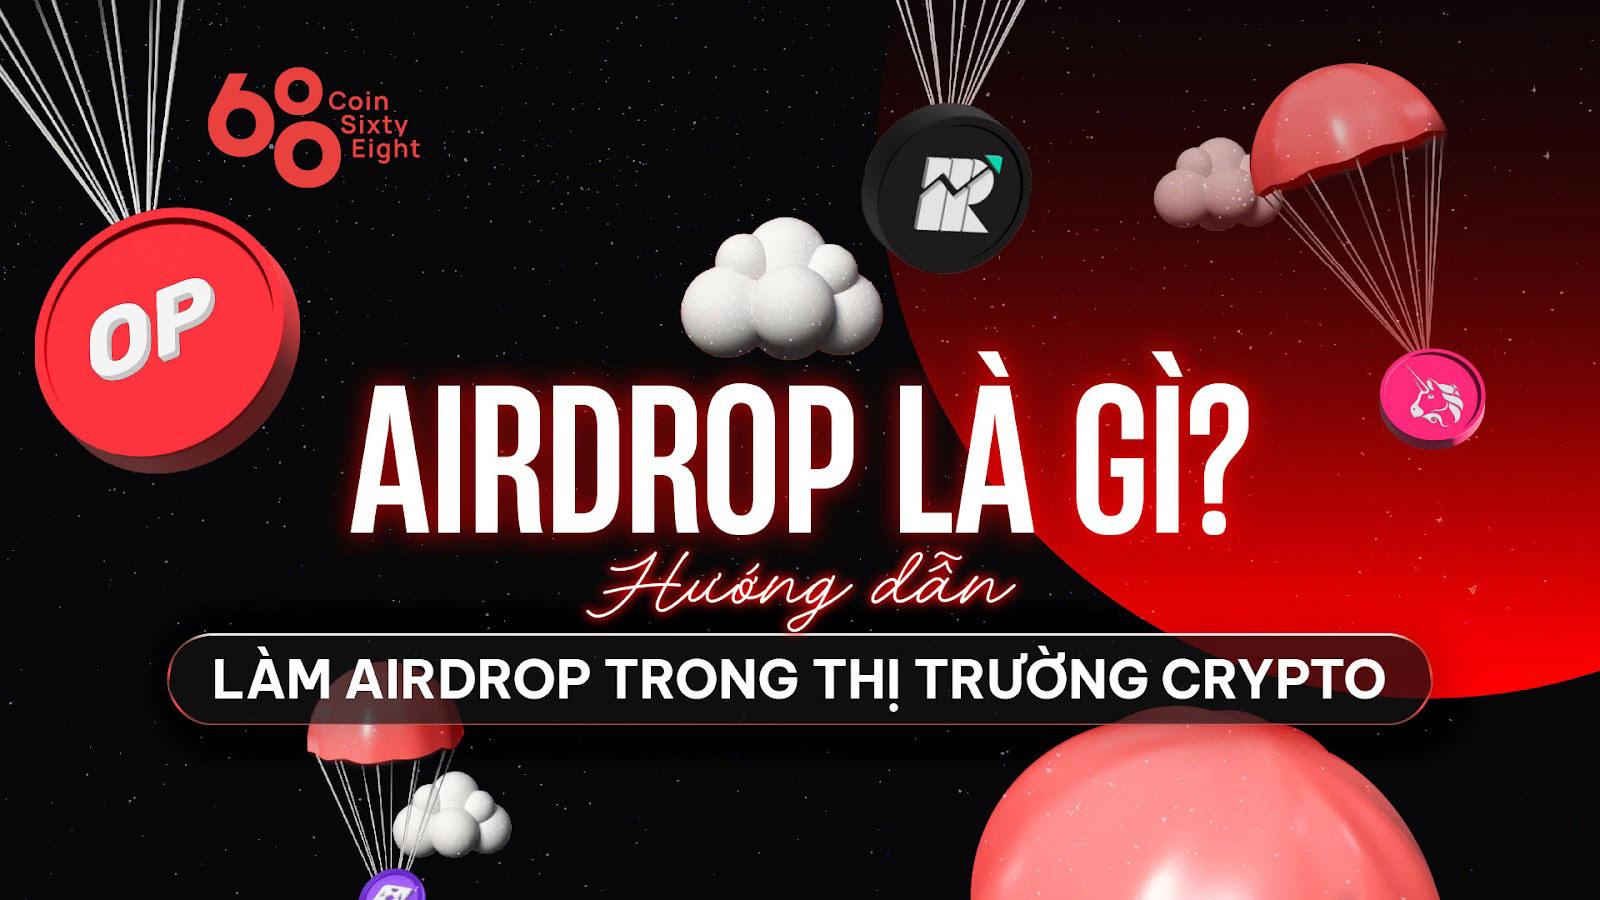 airdrop-la-gi-huong-dan-lam-airdrop-coin-trong-thi-truong-crypto